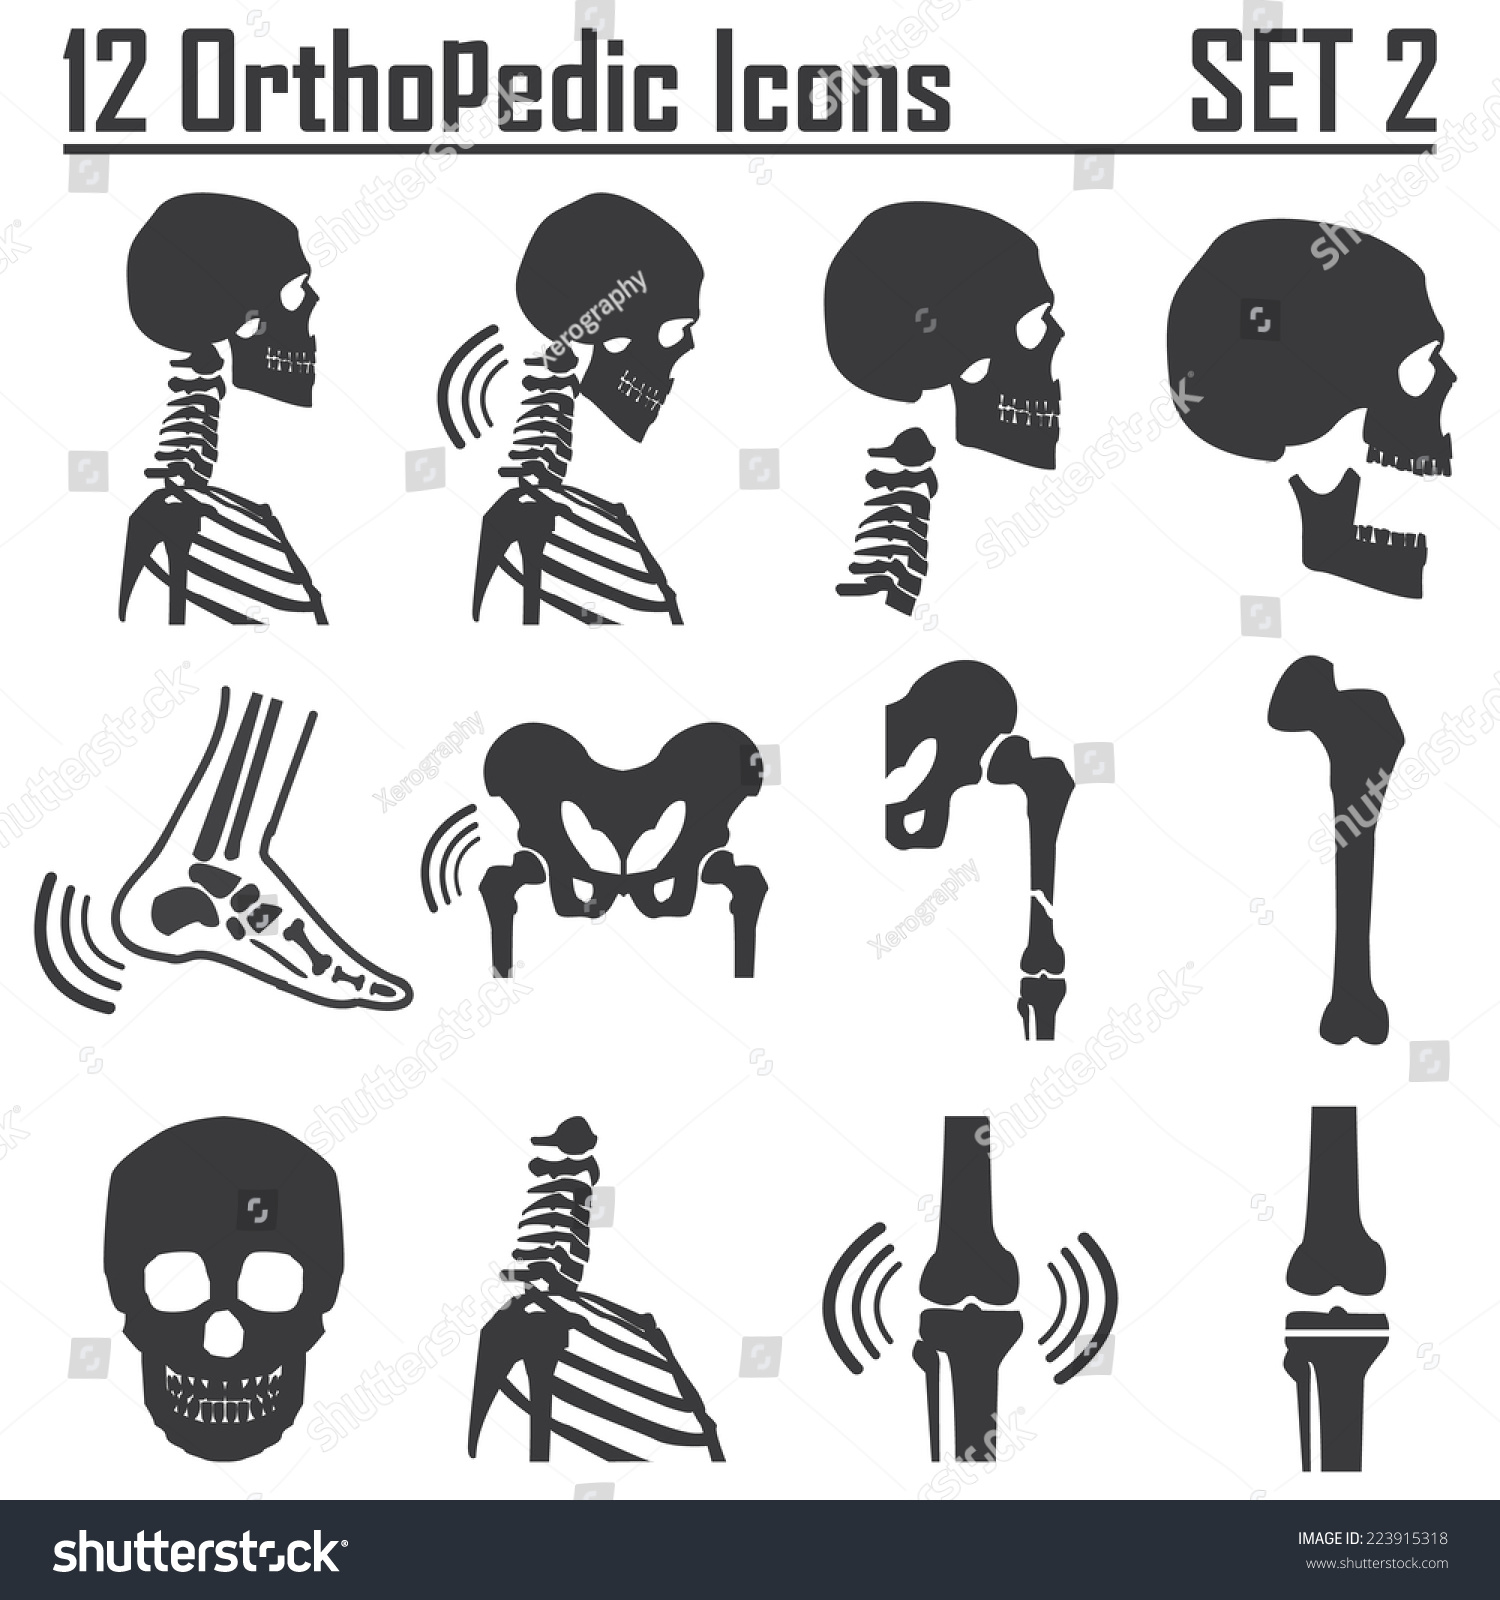 12 Orthopedic And Spine Symbol Set 2 - Vector Illustration Eps 10 Mono ...